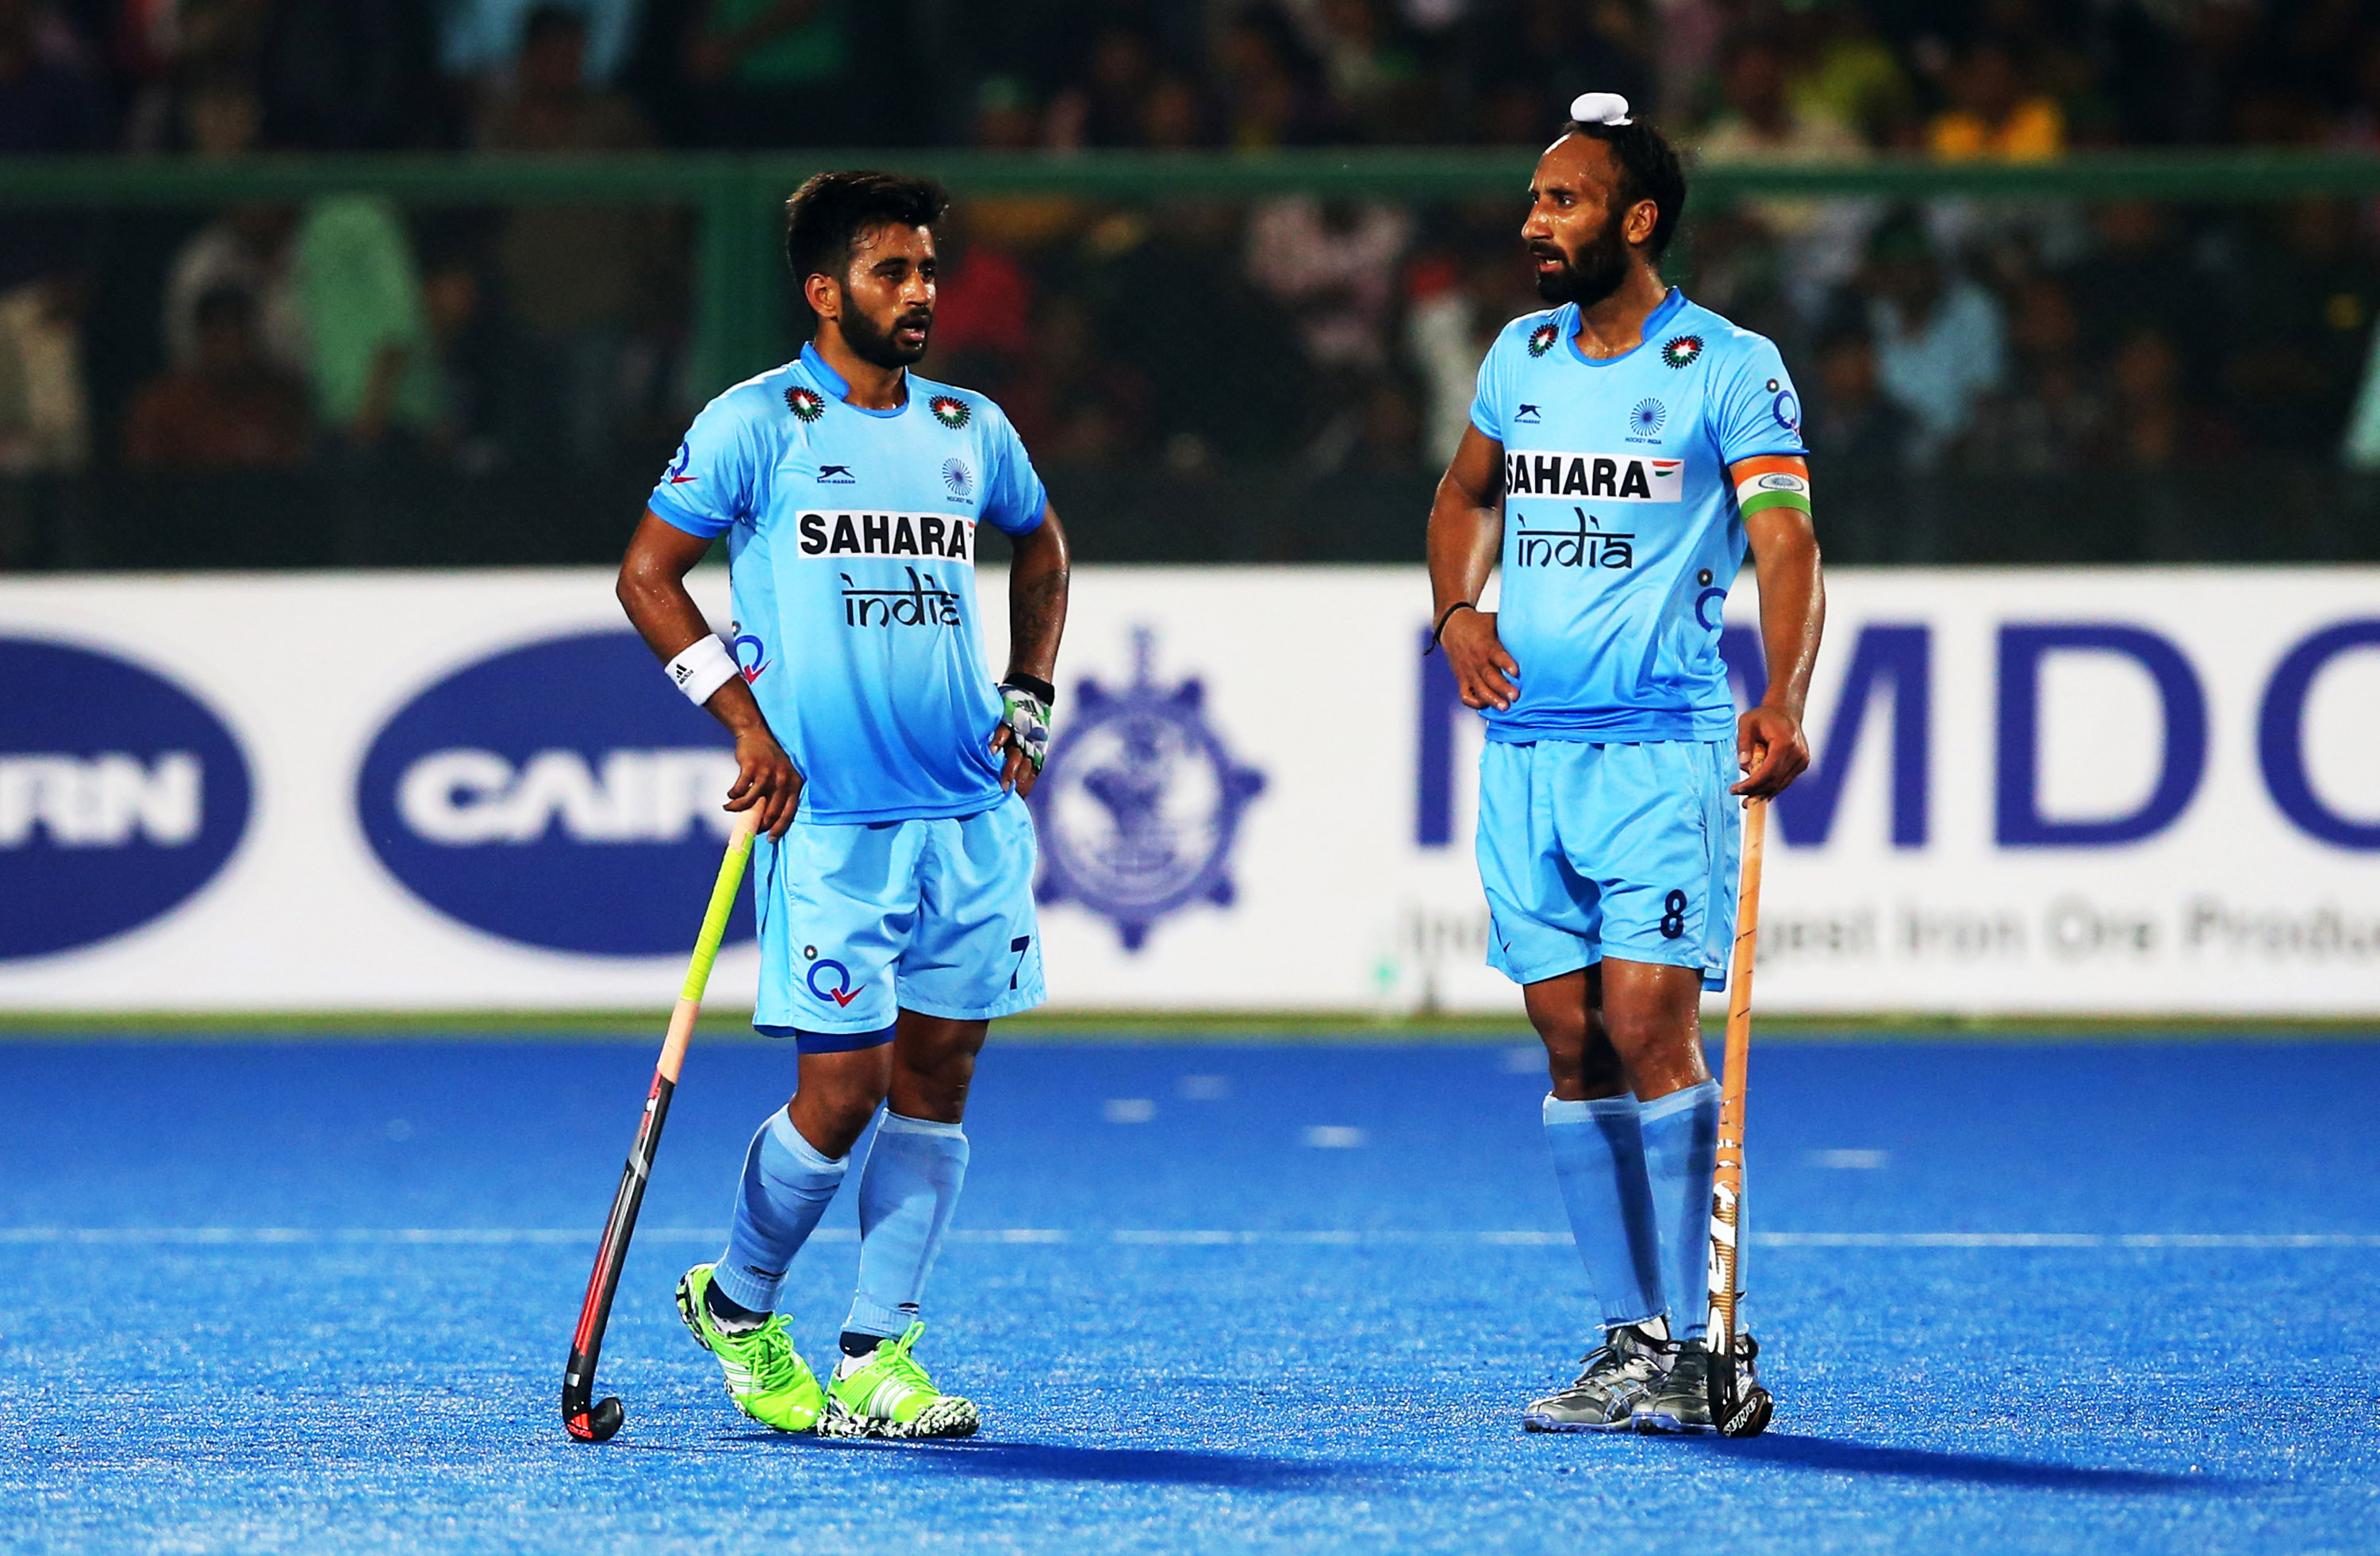 Hockey | Manpreet Singh and Dilpreet Singh help India overcome Pakistan challenge